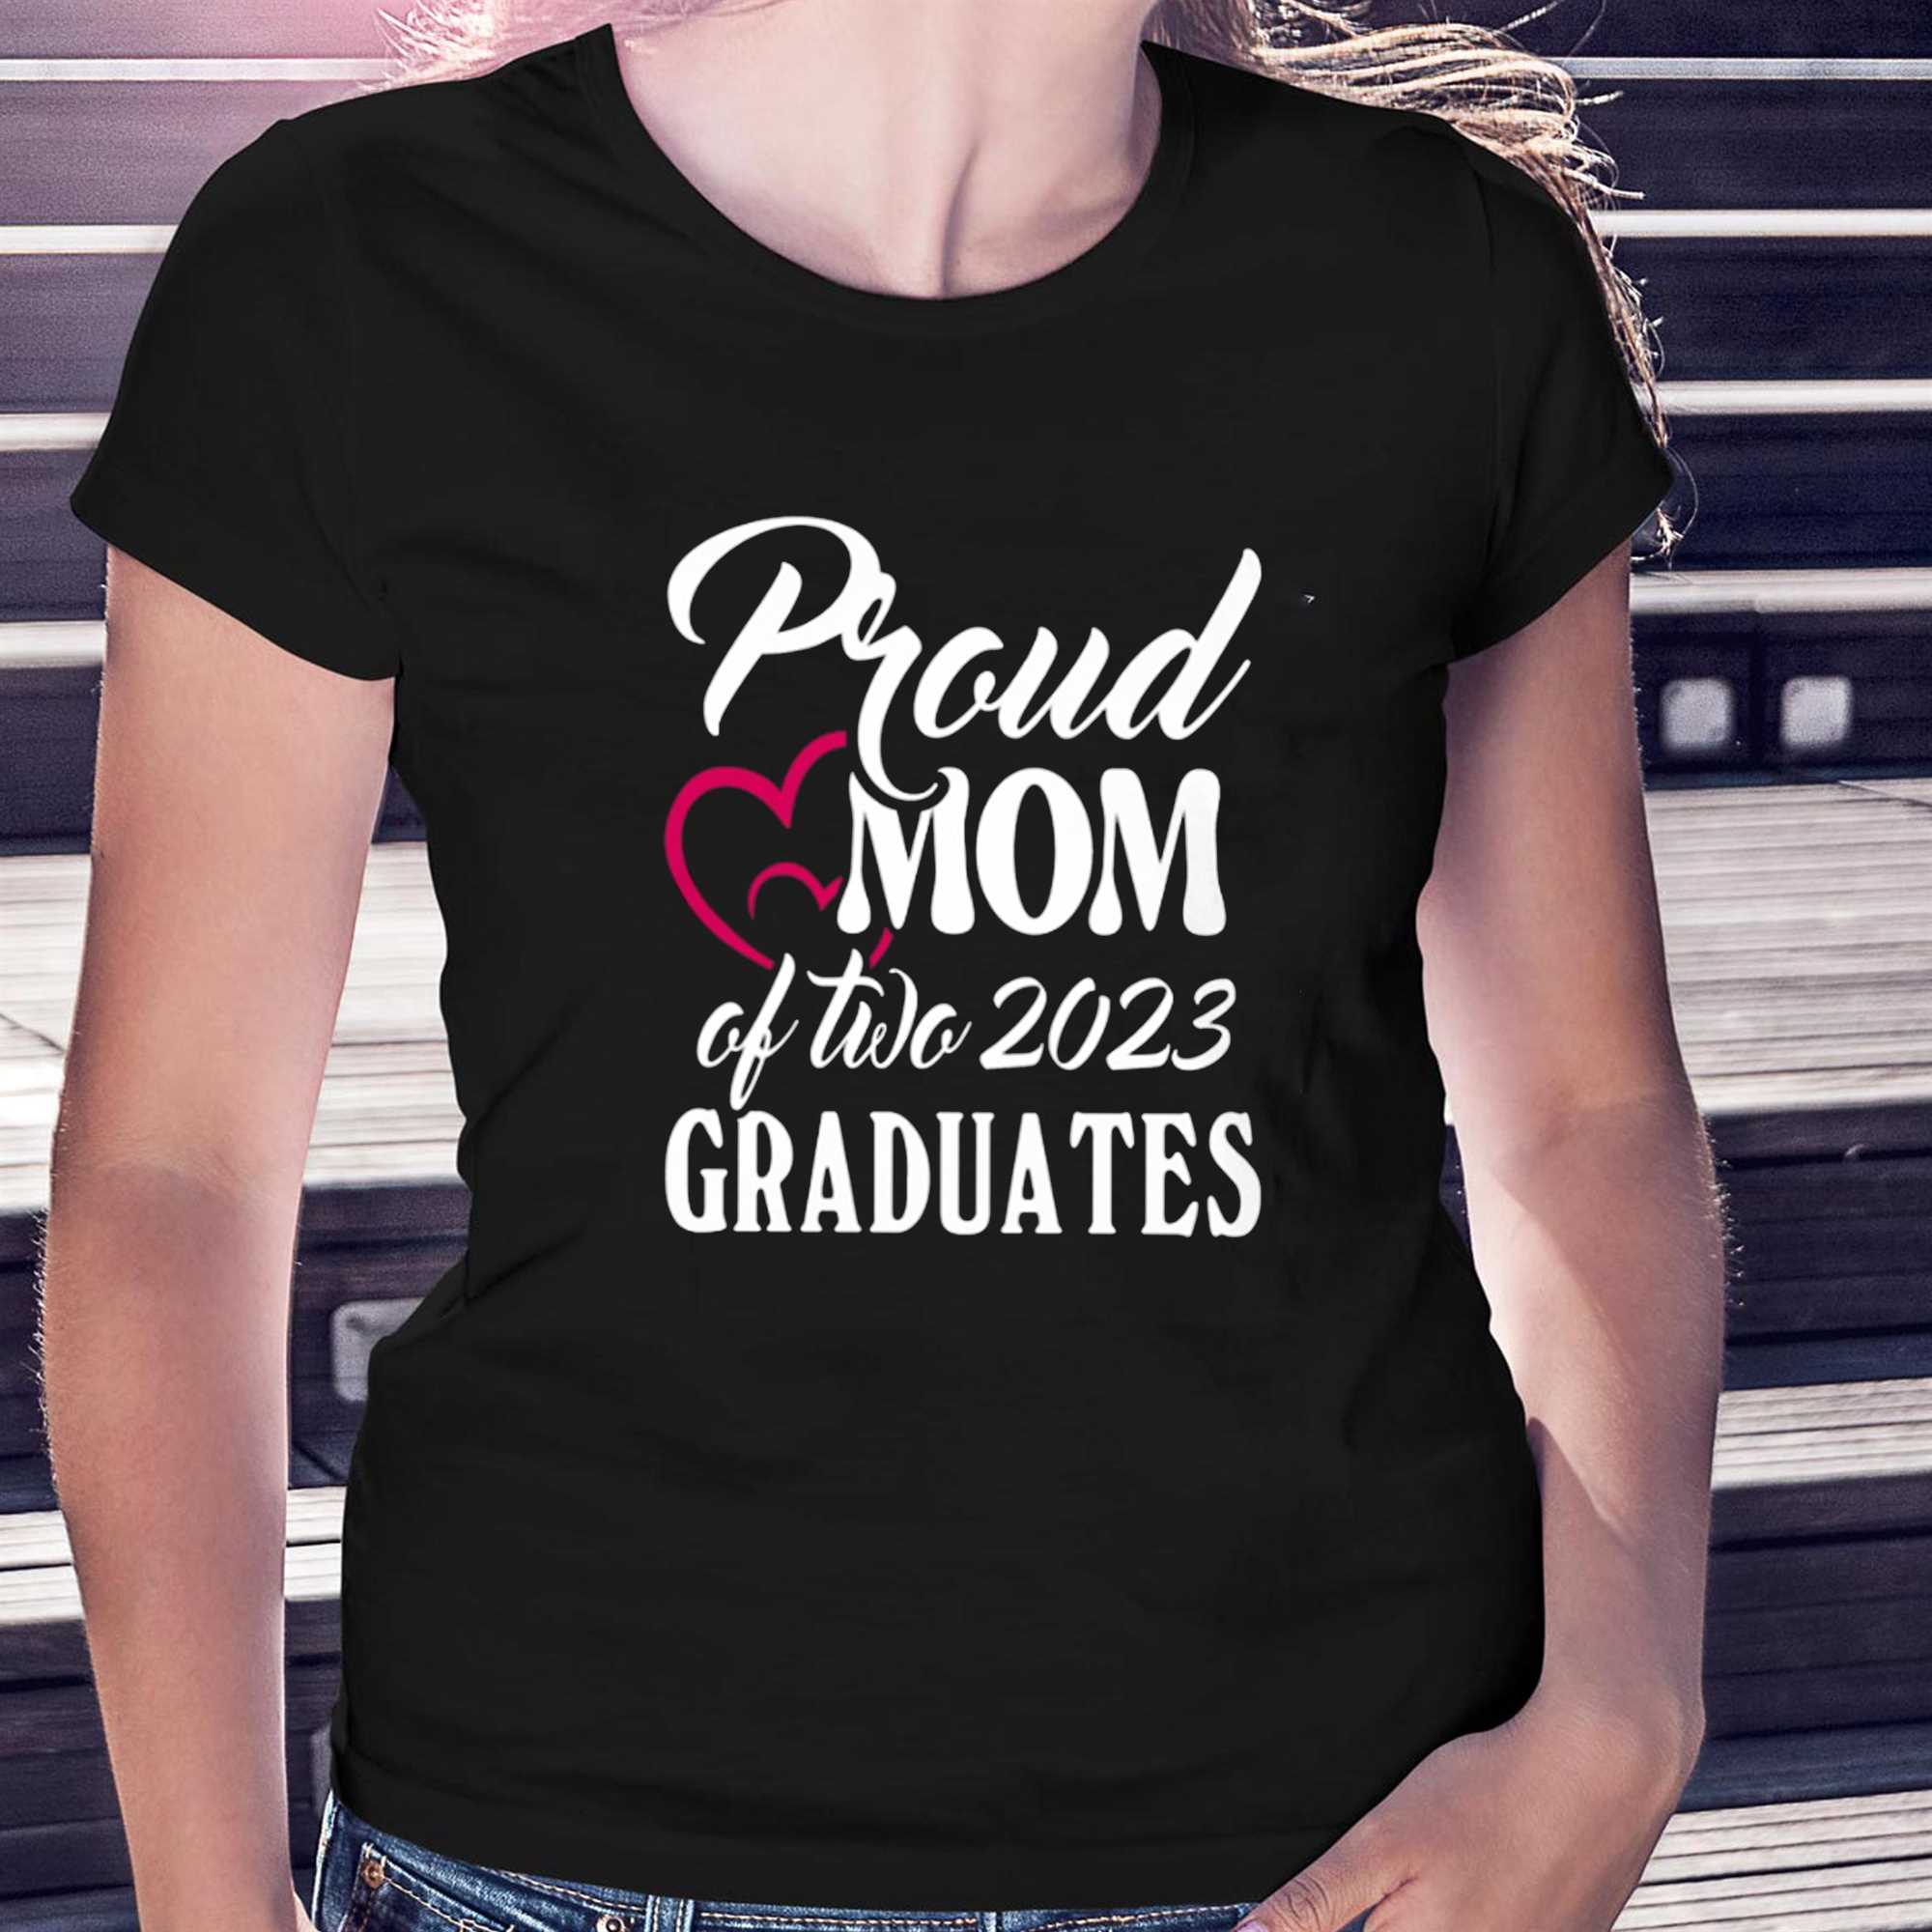 Proud Mom Of Two 2023 Graduates Classic Classic T Shirt Shibtee Clothing